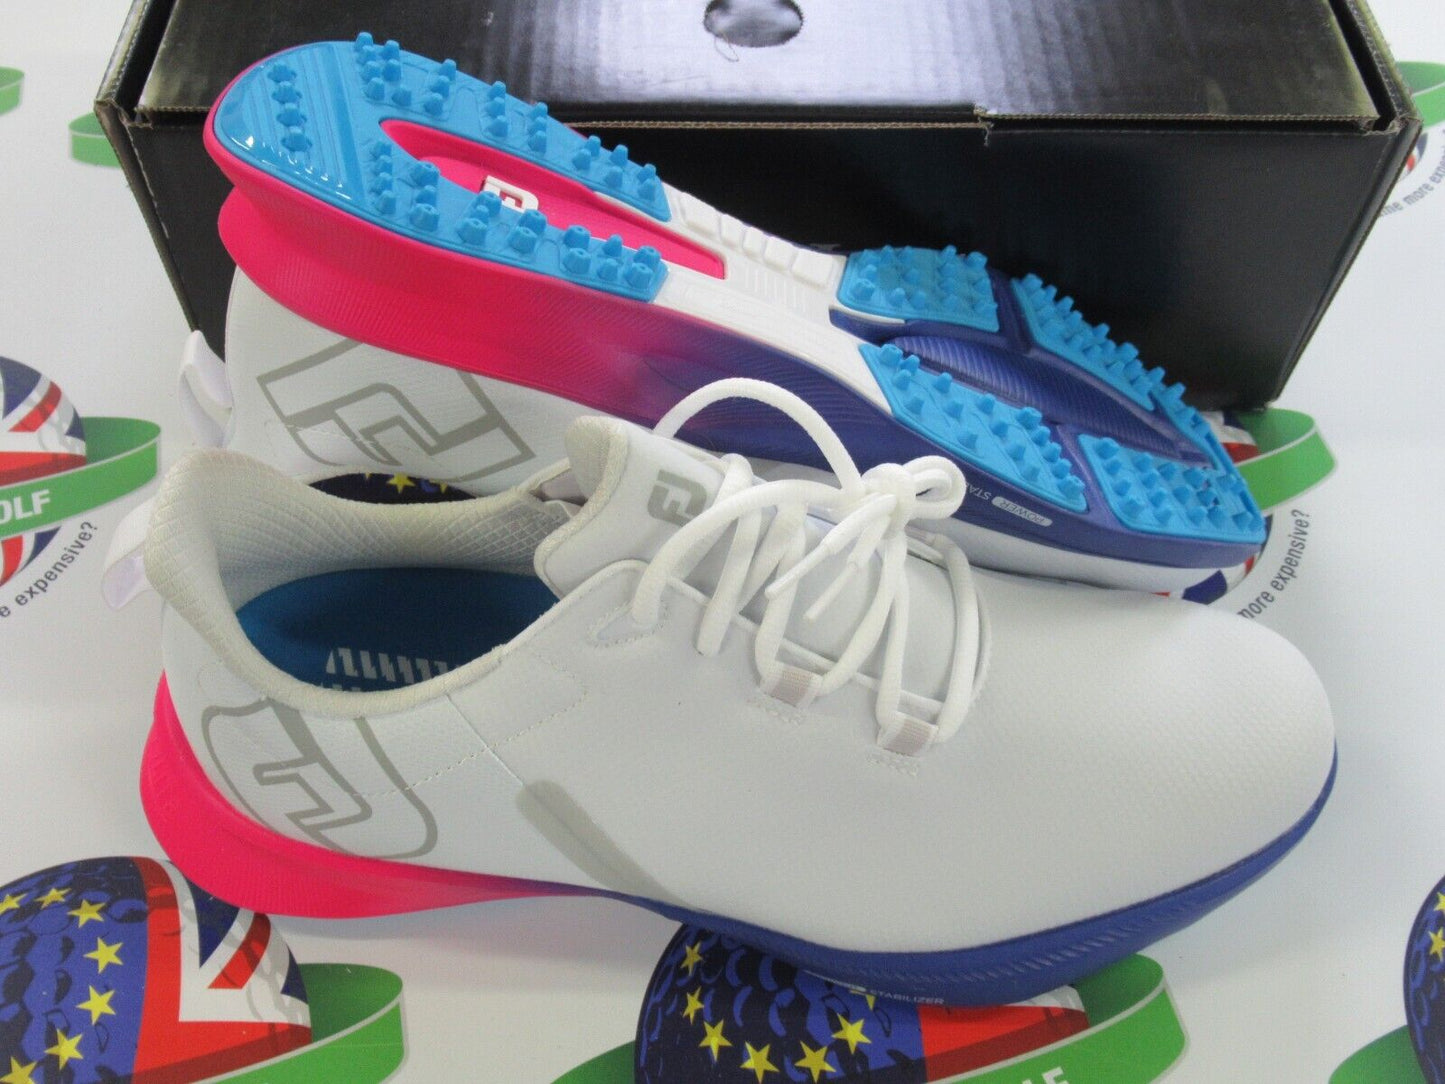 footjoy fuel sport waterproof golf shoes 55455k white/magenta/purple 7.5 medium